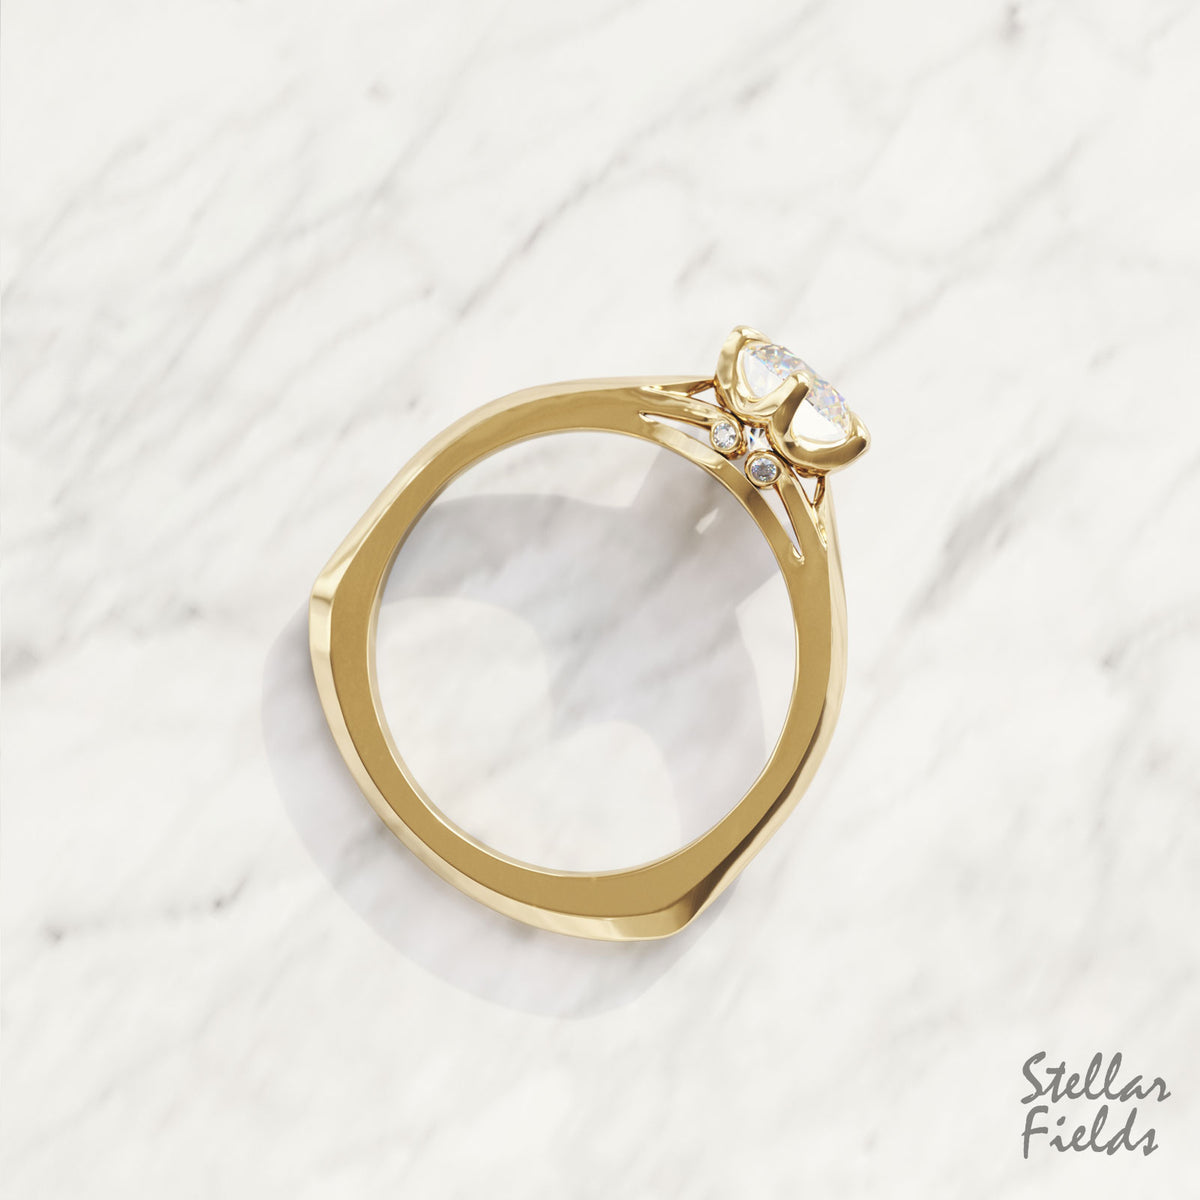 Unique Engagement Ring Vintage Engagement Ring European Shank 18k Yellow Gold Stellar Fields